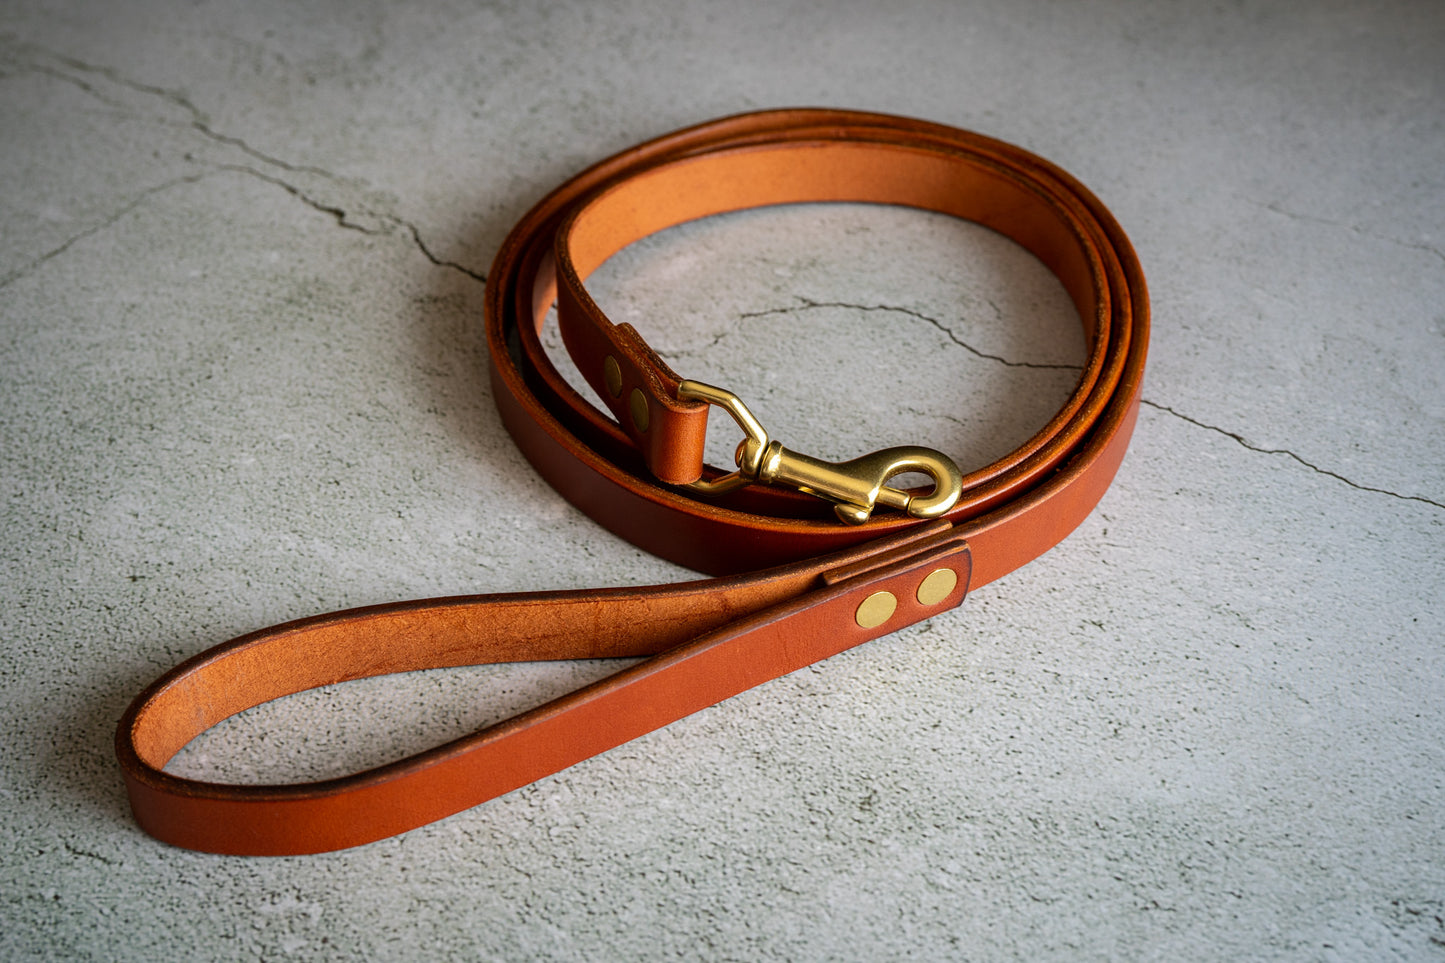 Handmade chestnut leather dog leash wrapped around itself.